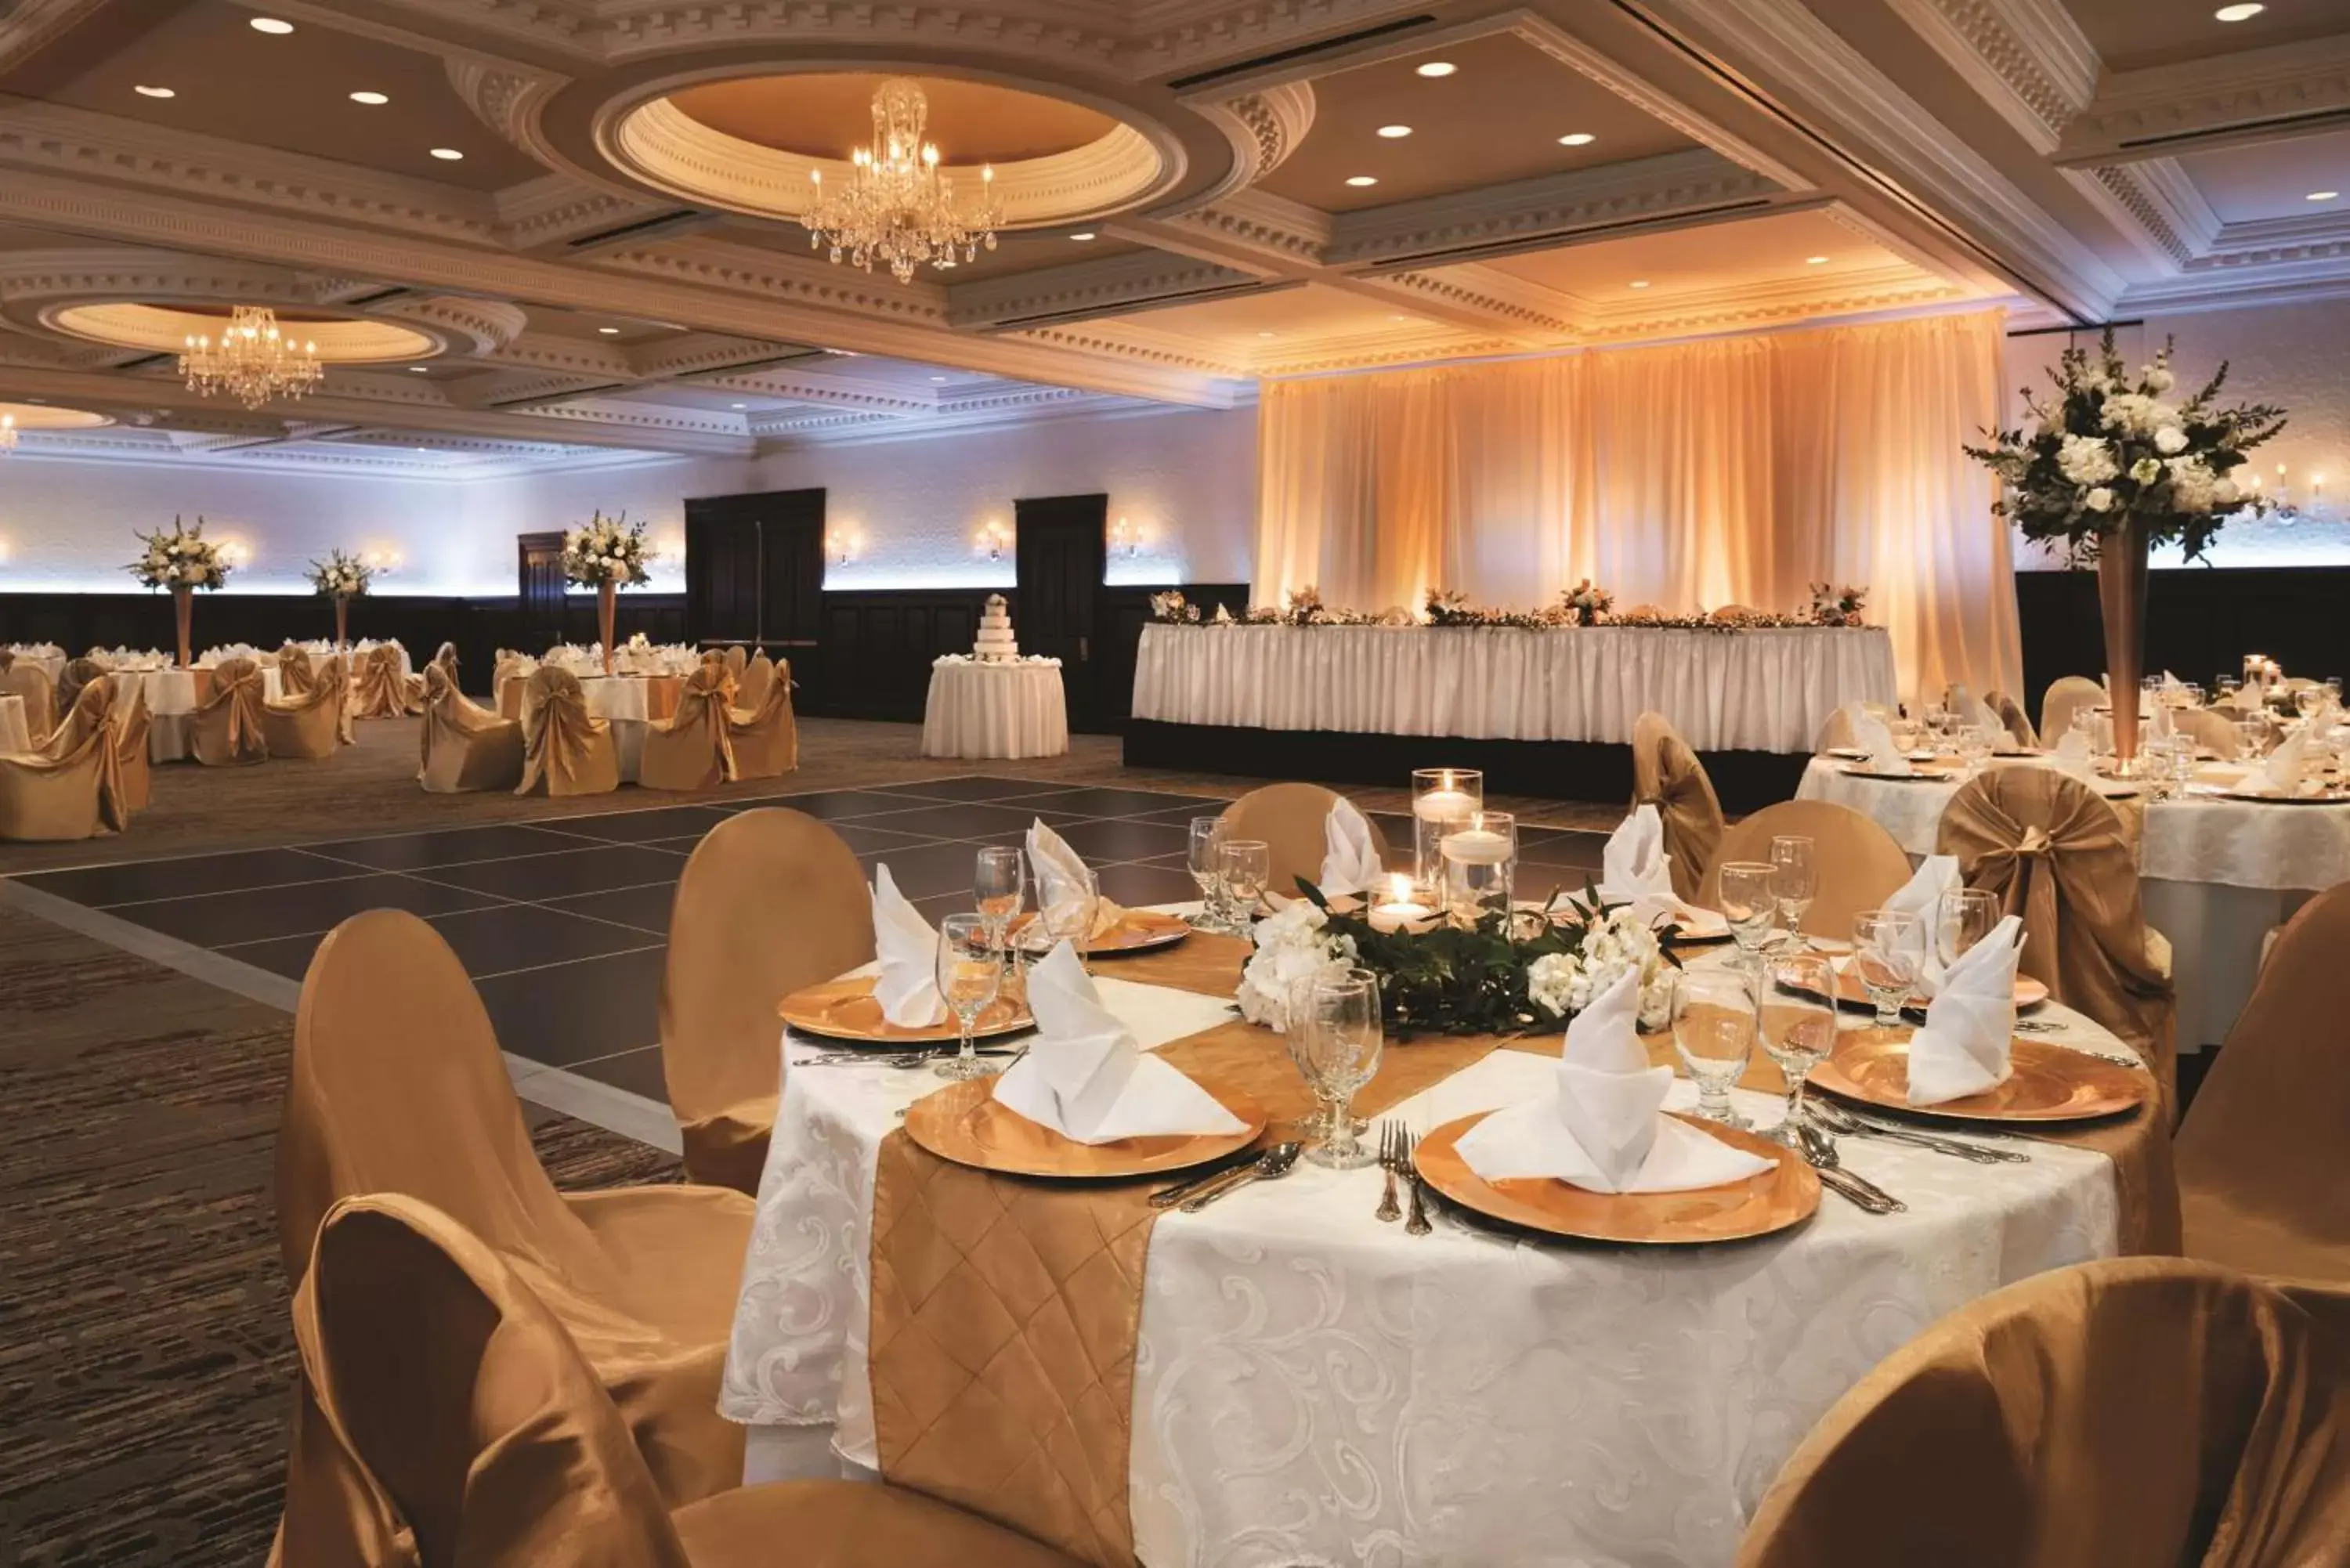 On site, Banquet Facilities in Radisson Hotel Cincinnati Riverfront